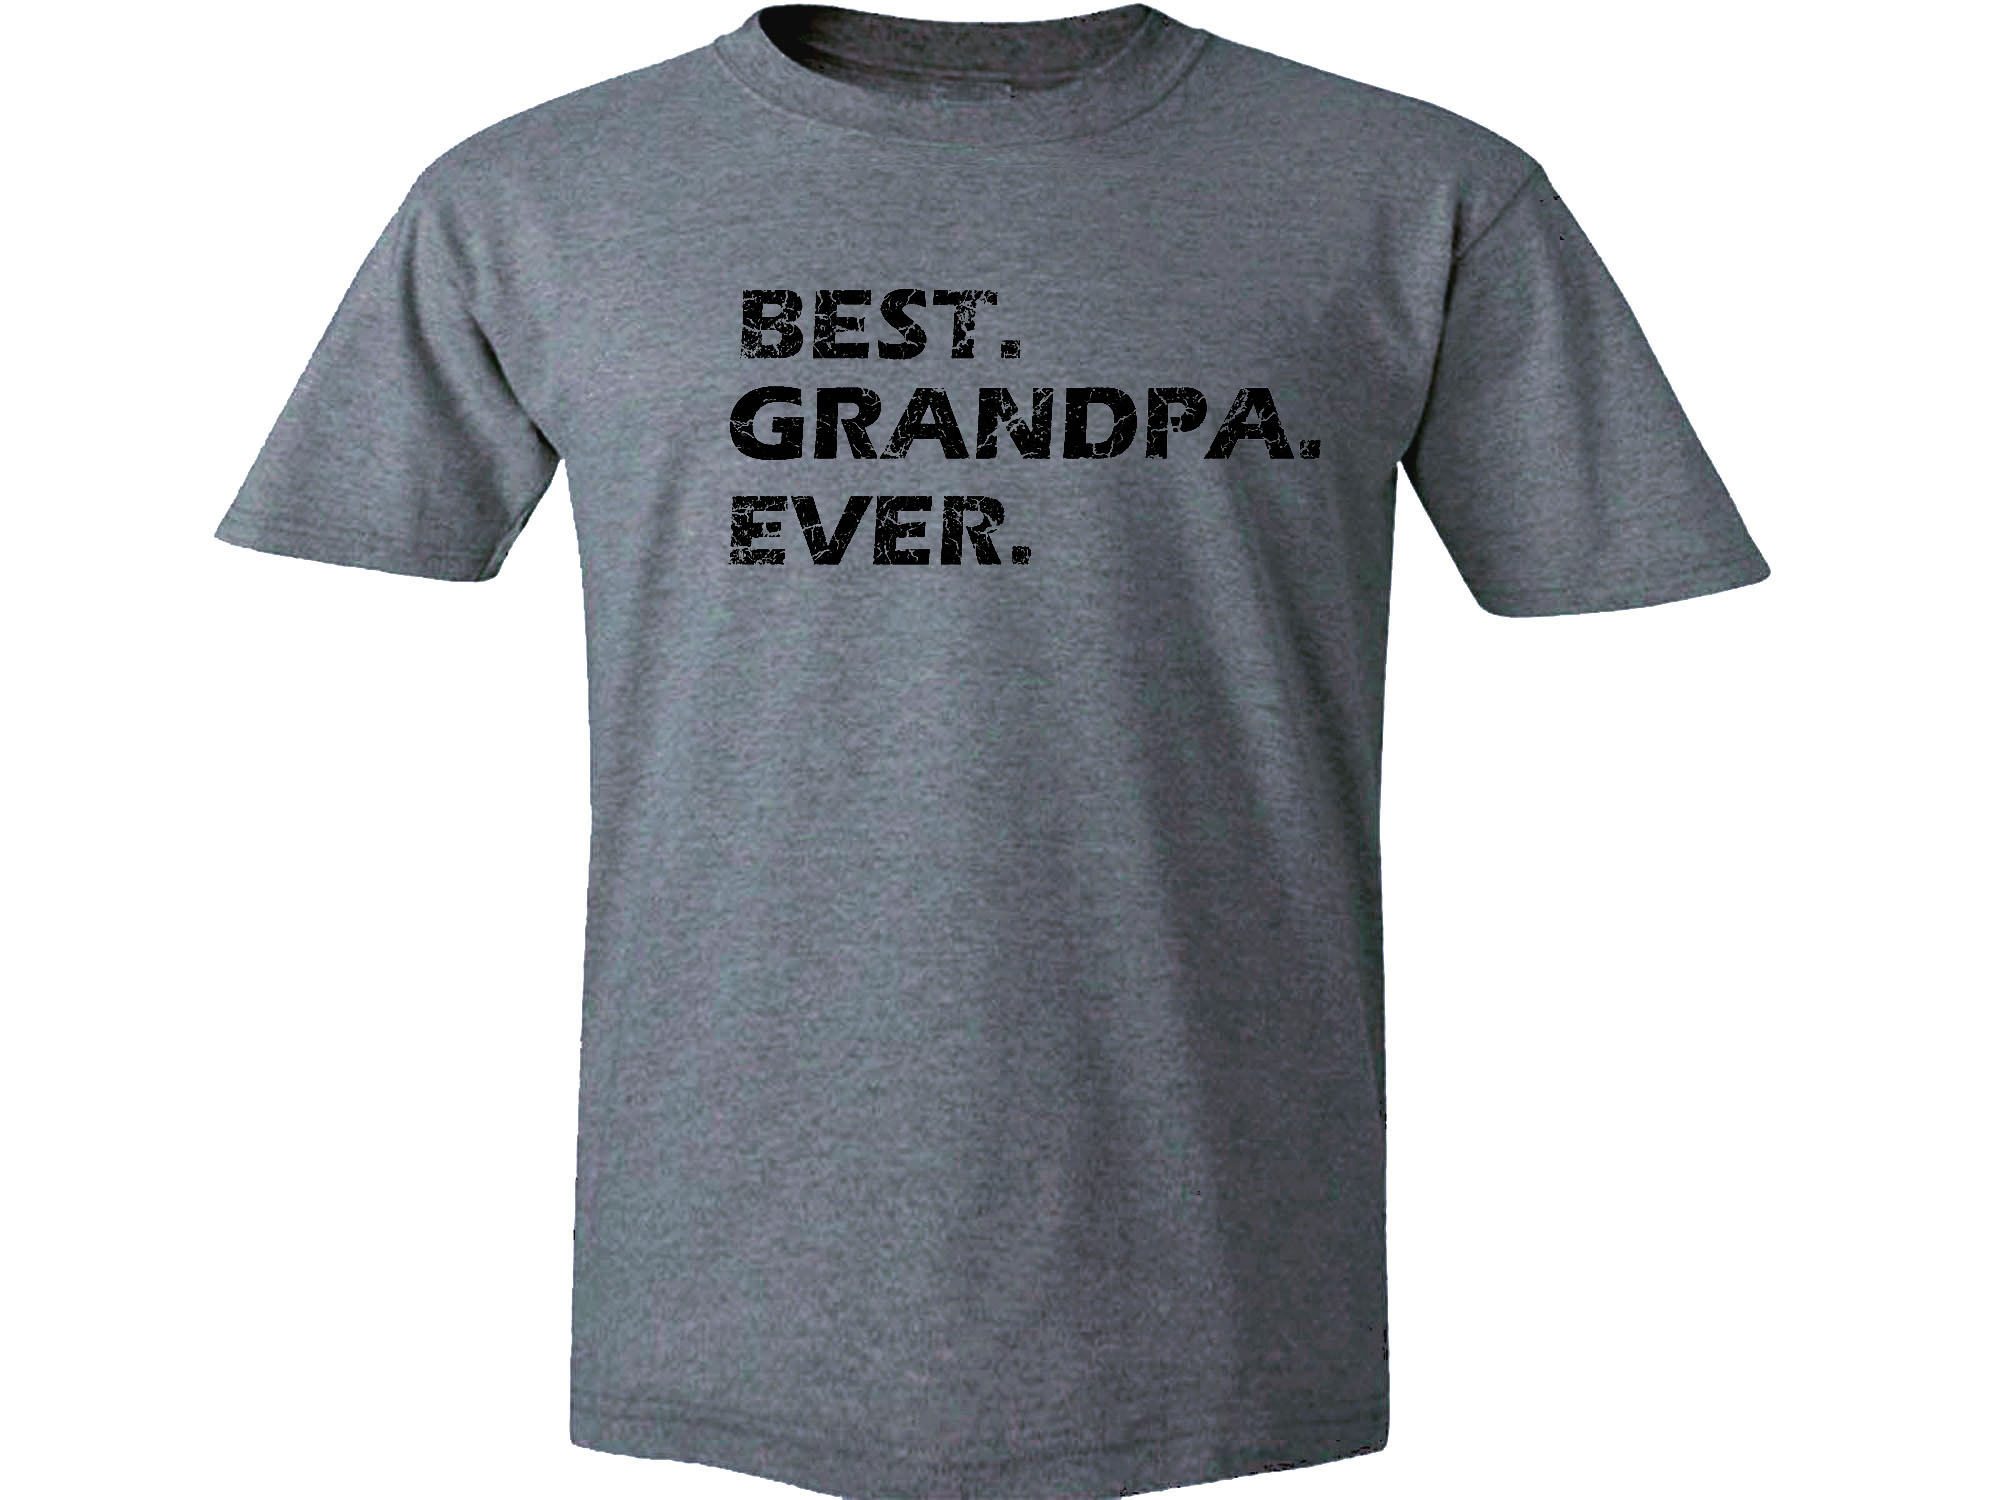 Best grandpa ever distressed print gray t-shirt